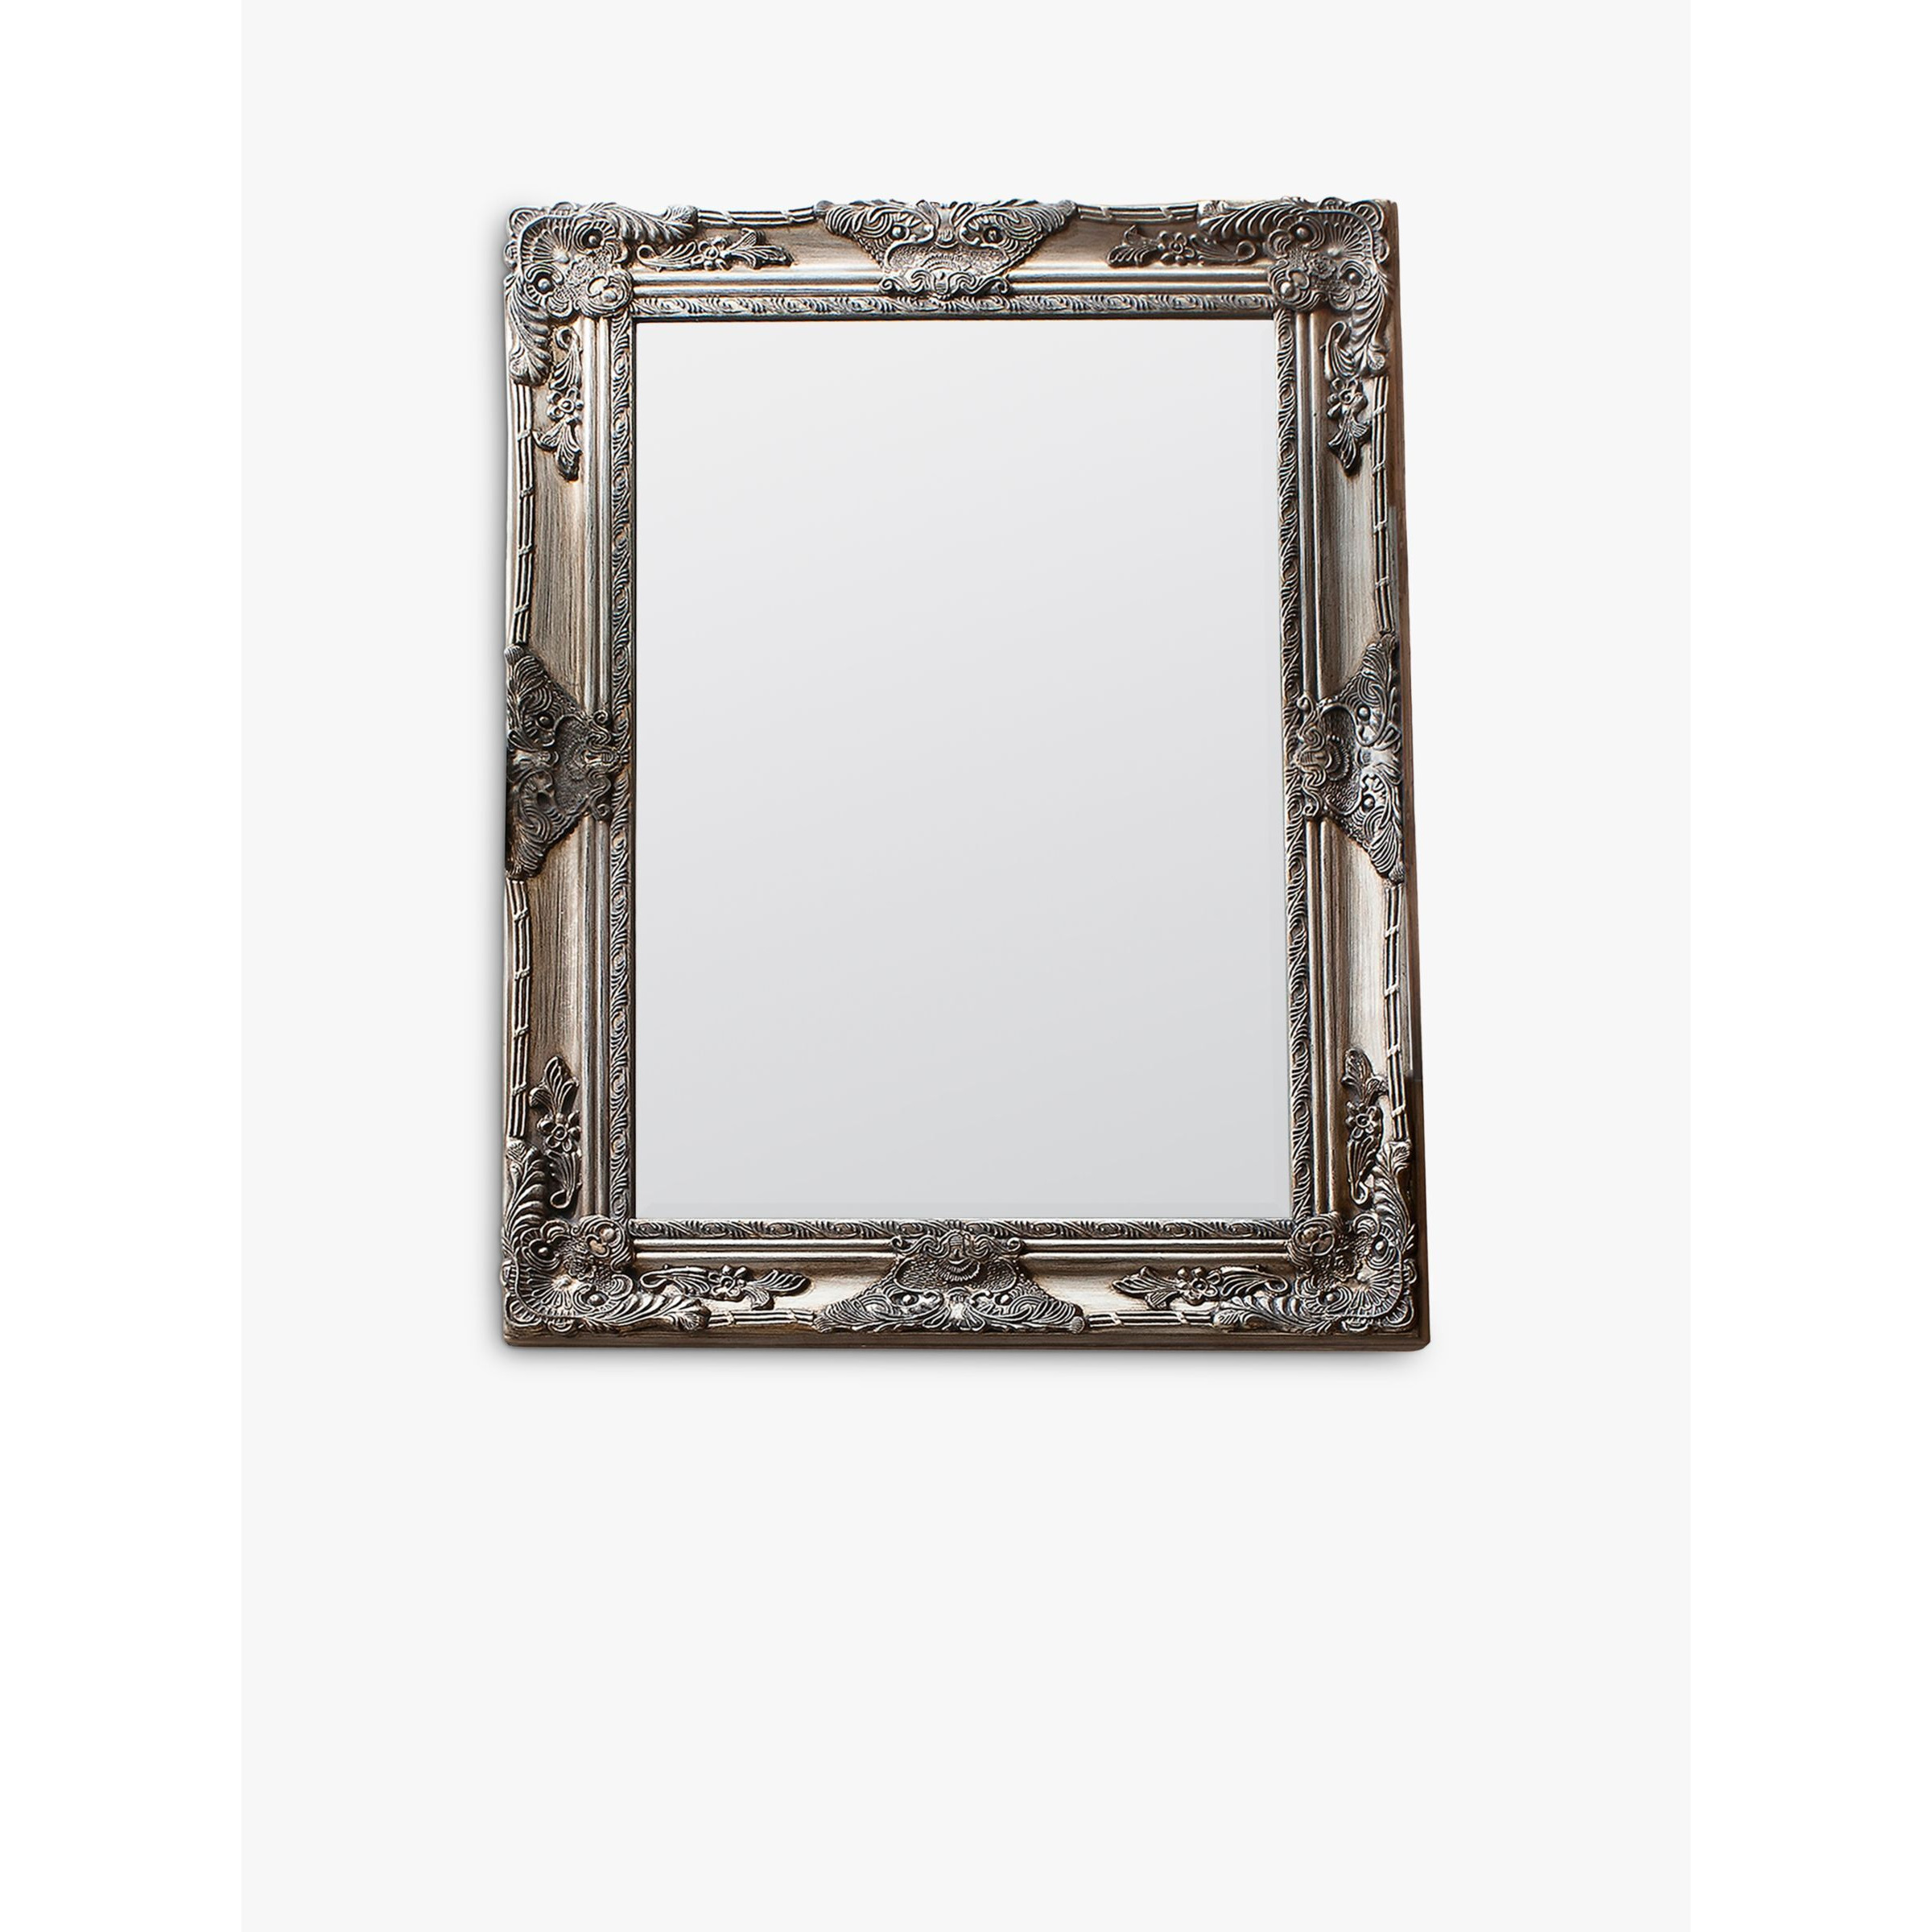 Gallery Direct Hampshire Rectangular Decorative Frame Wall Mirror, 114 x 83cm - image 1